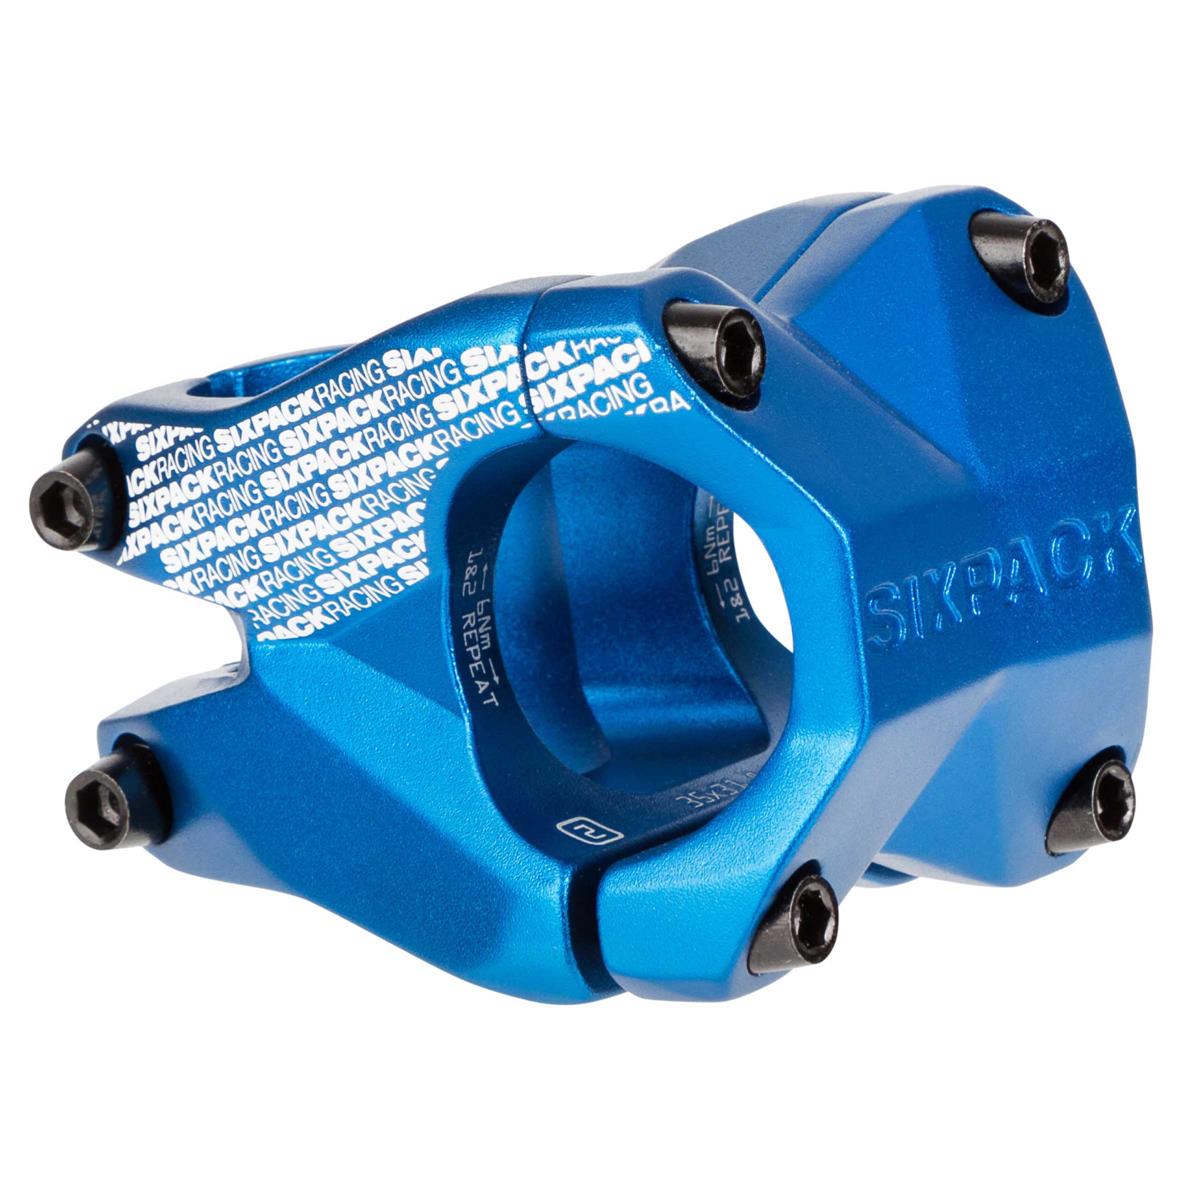 Sixpack MTB Stem Menace Blue, 31.8 mm, 35 mm Reach